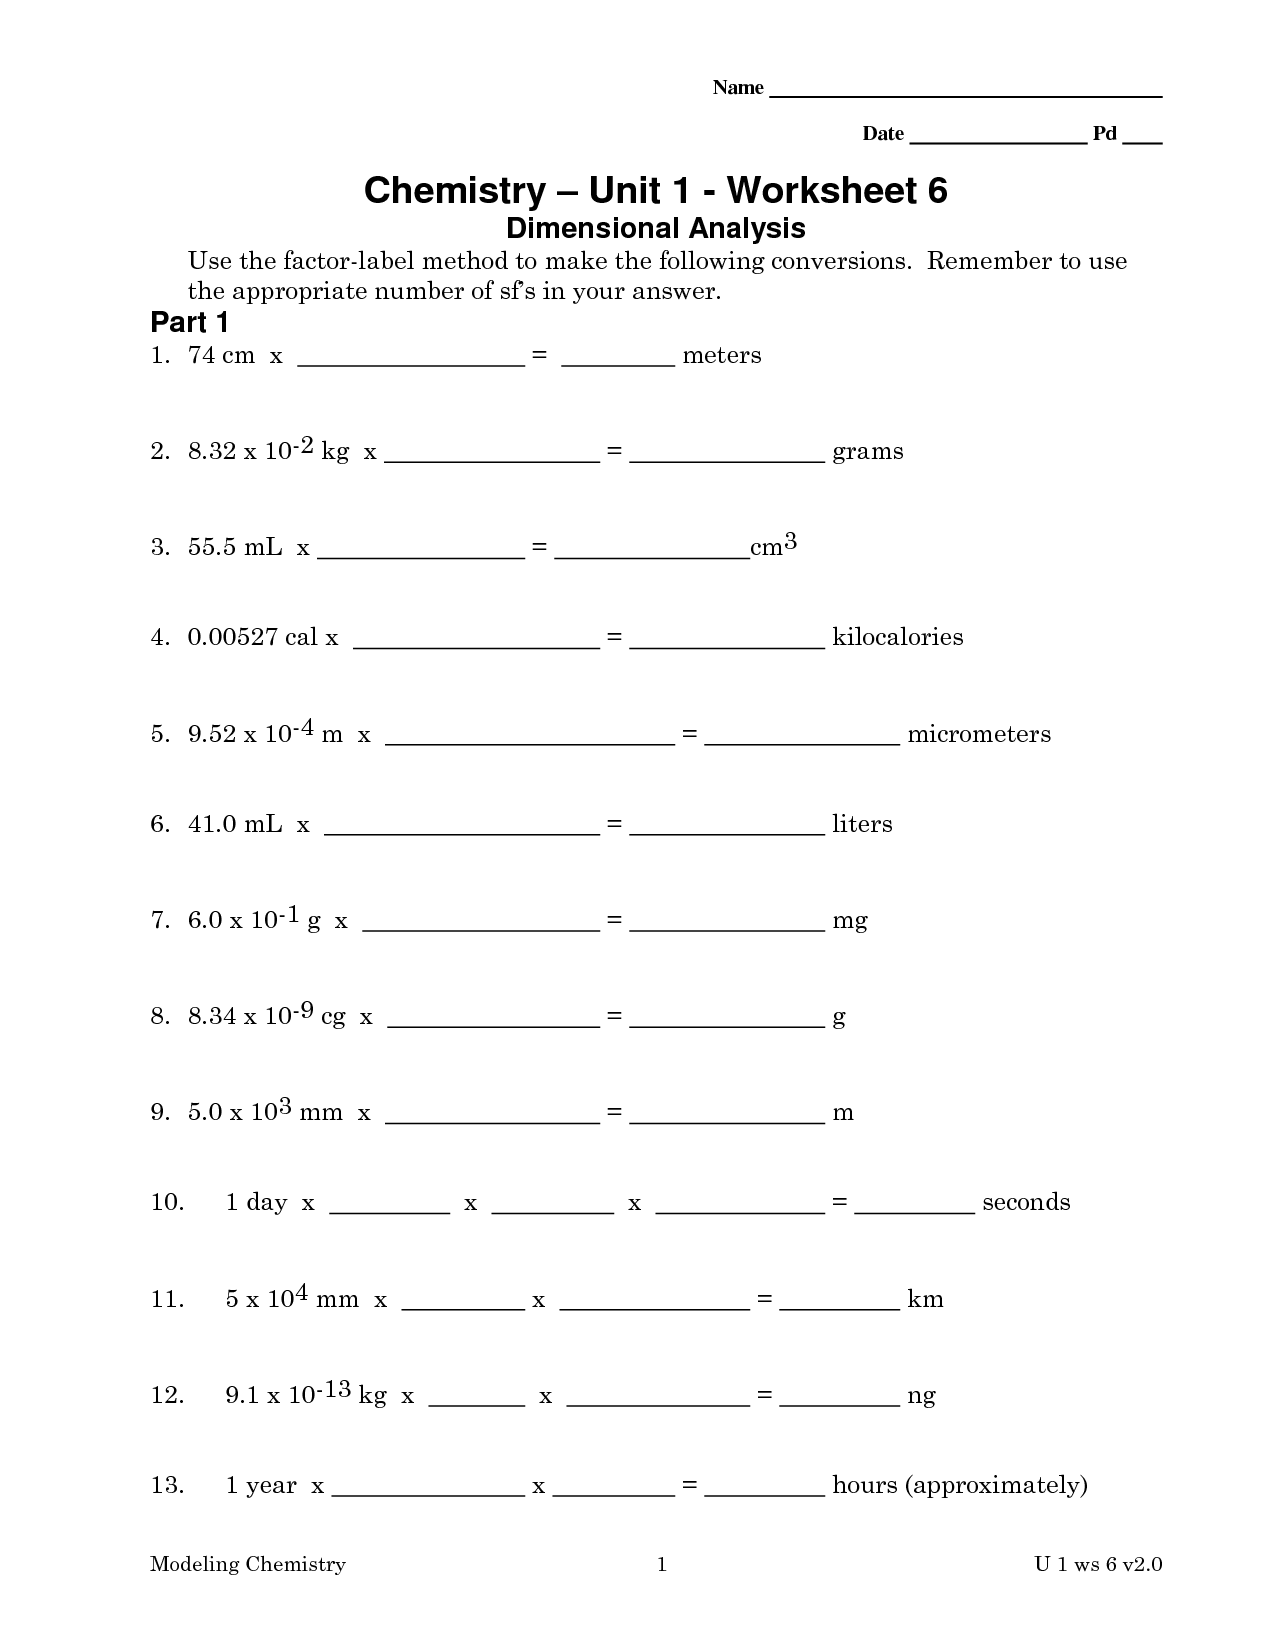 Chemistry Unit 1 Worksheet 6 Image